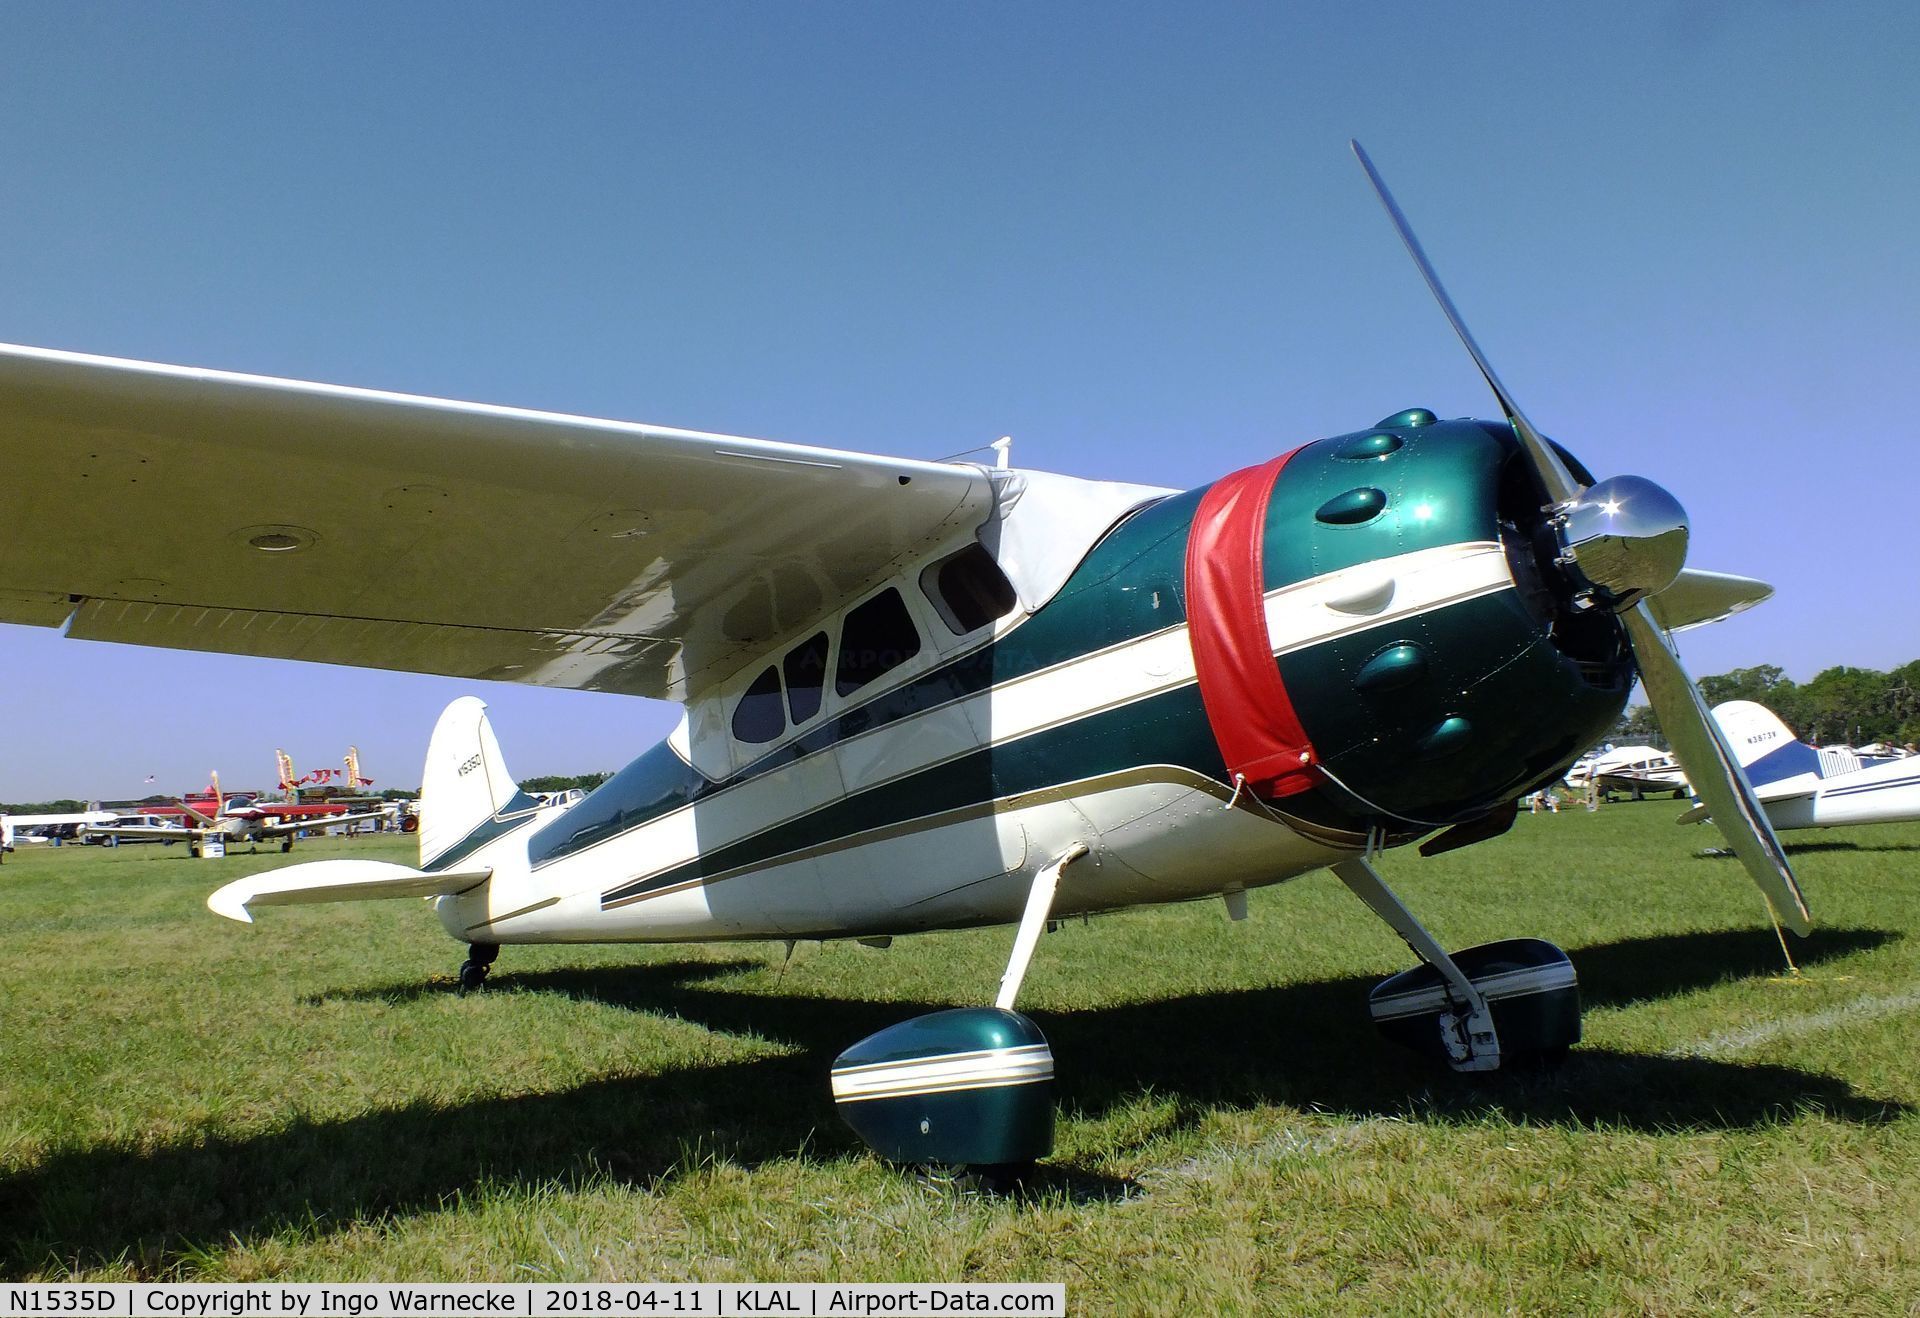 N1535D, 1952 Cessna 190 C/N 7757, Cessna 190 at 2018 Sun 'n Fun, Lakeland FL